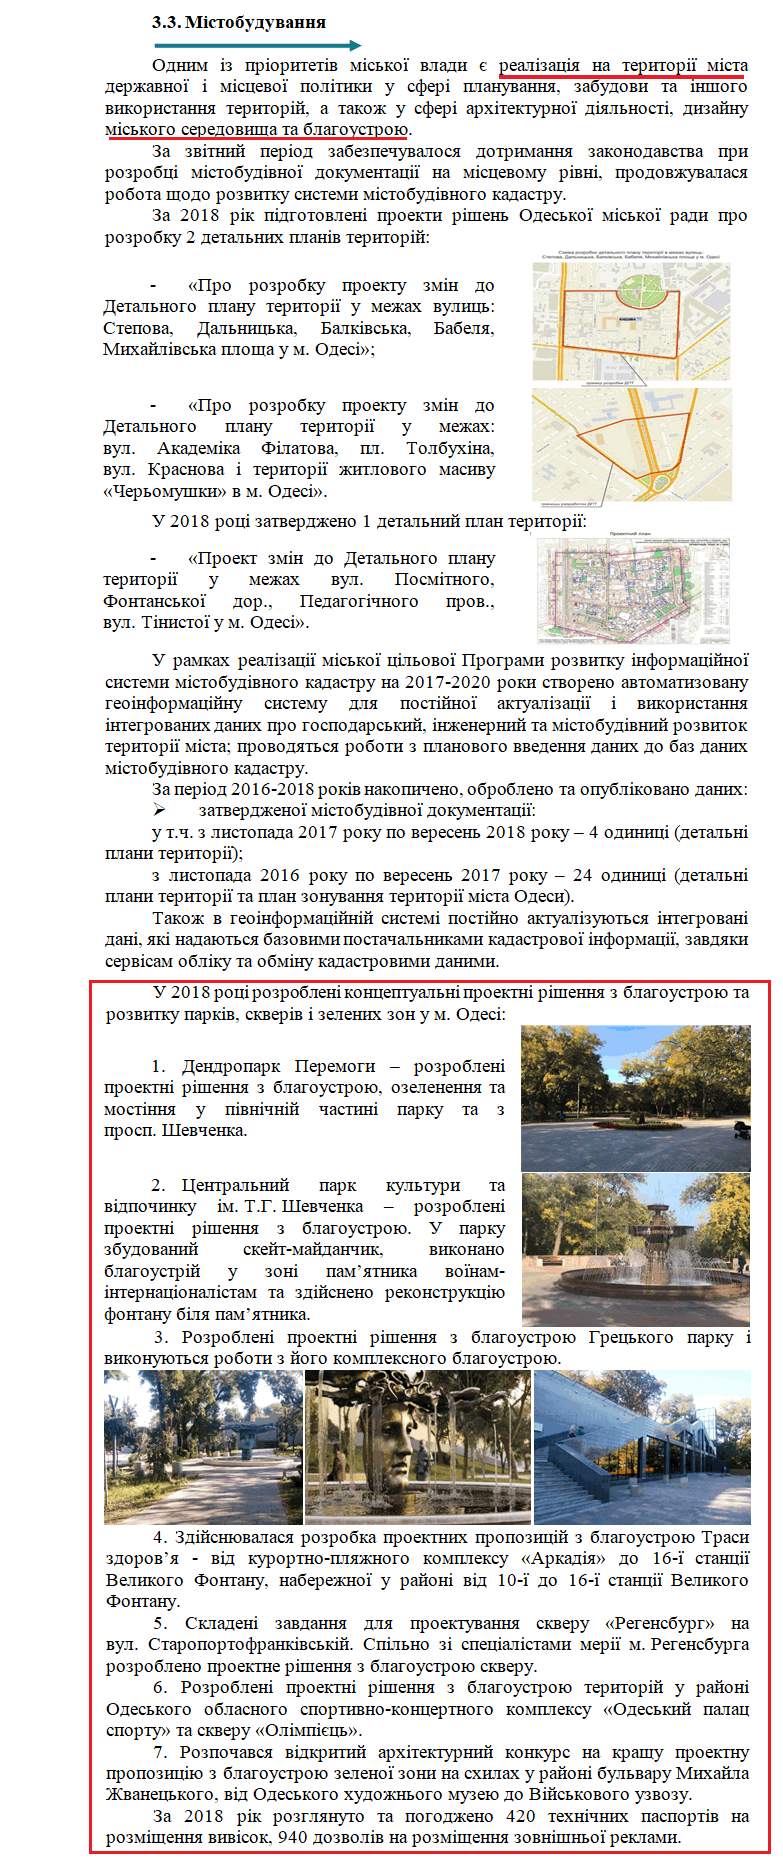 https://omr.gov.ua/ru/city/mayor/report/